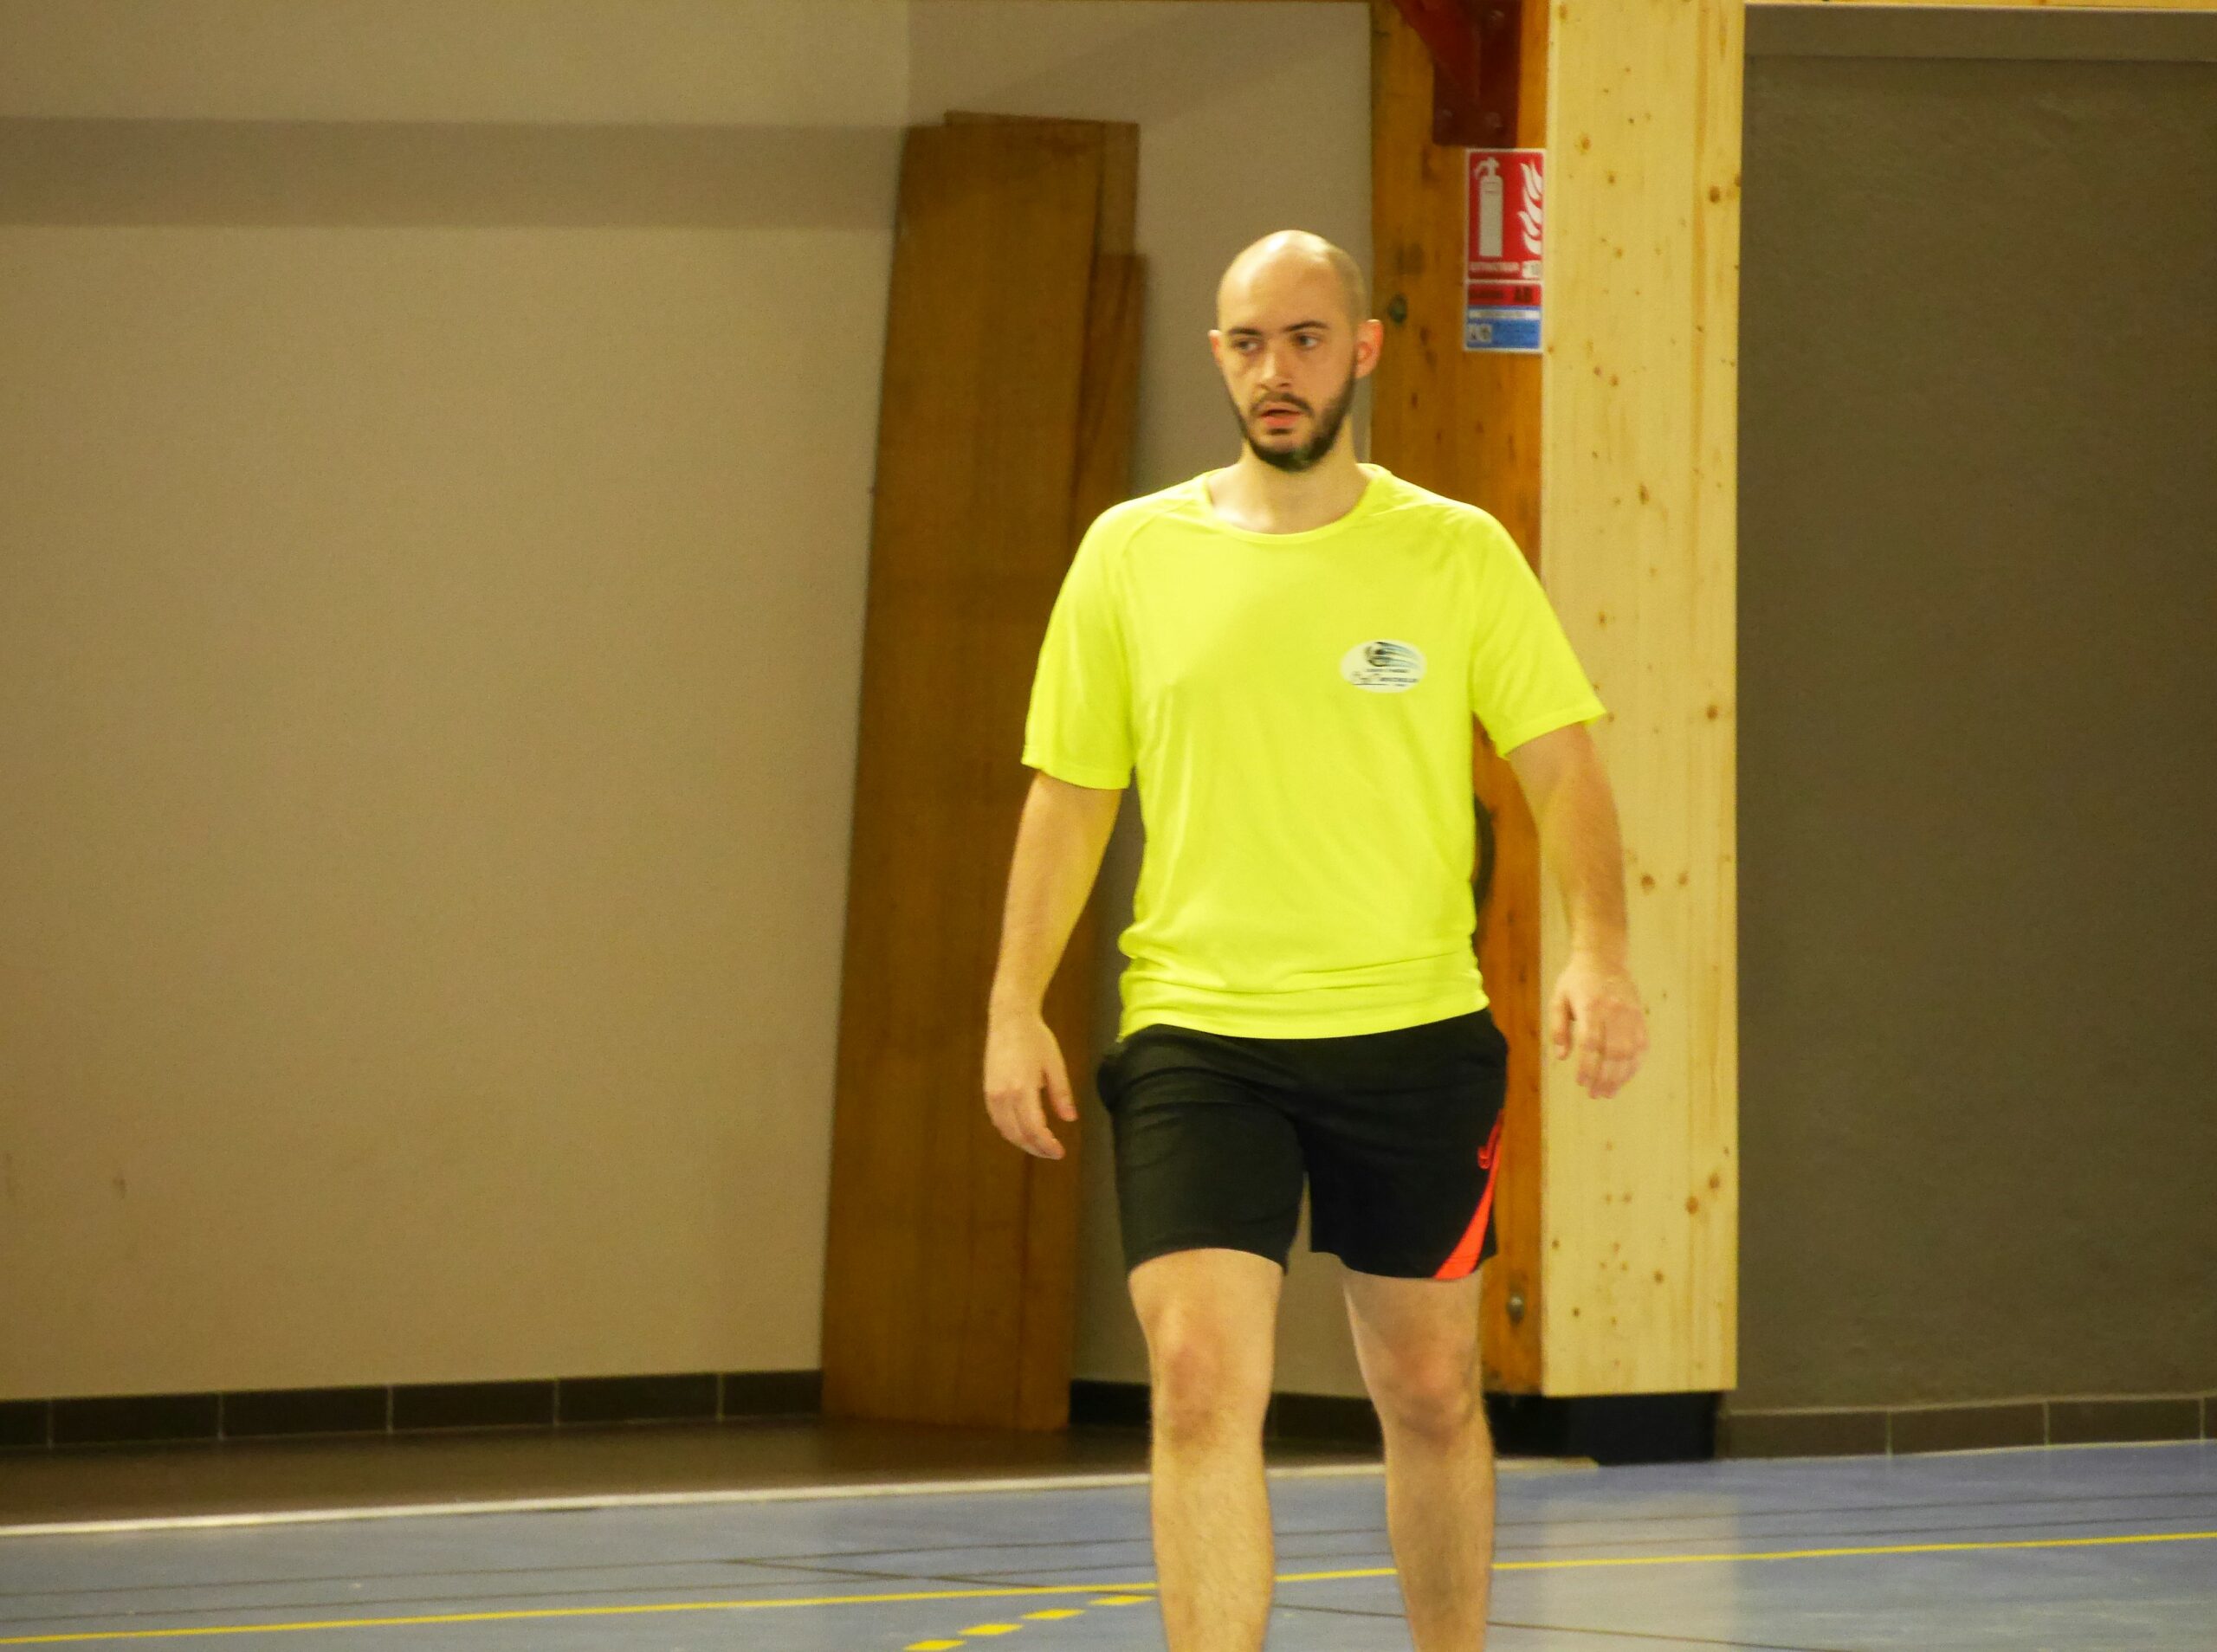 Tournoi Sébastien Péri Futsal